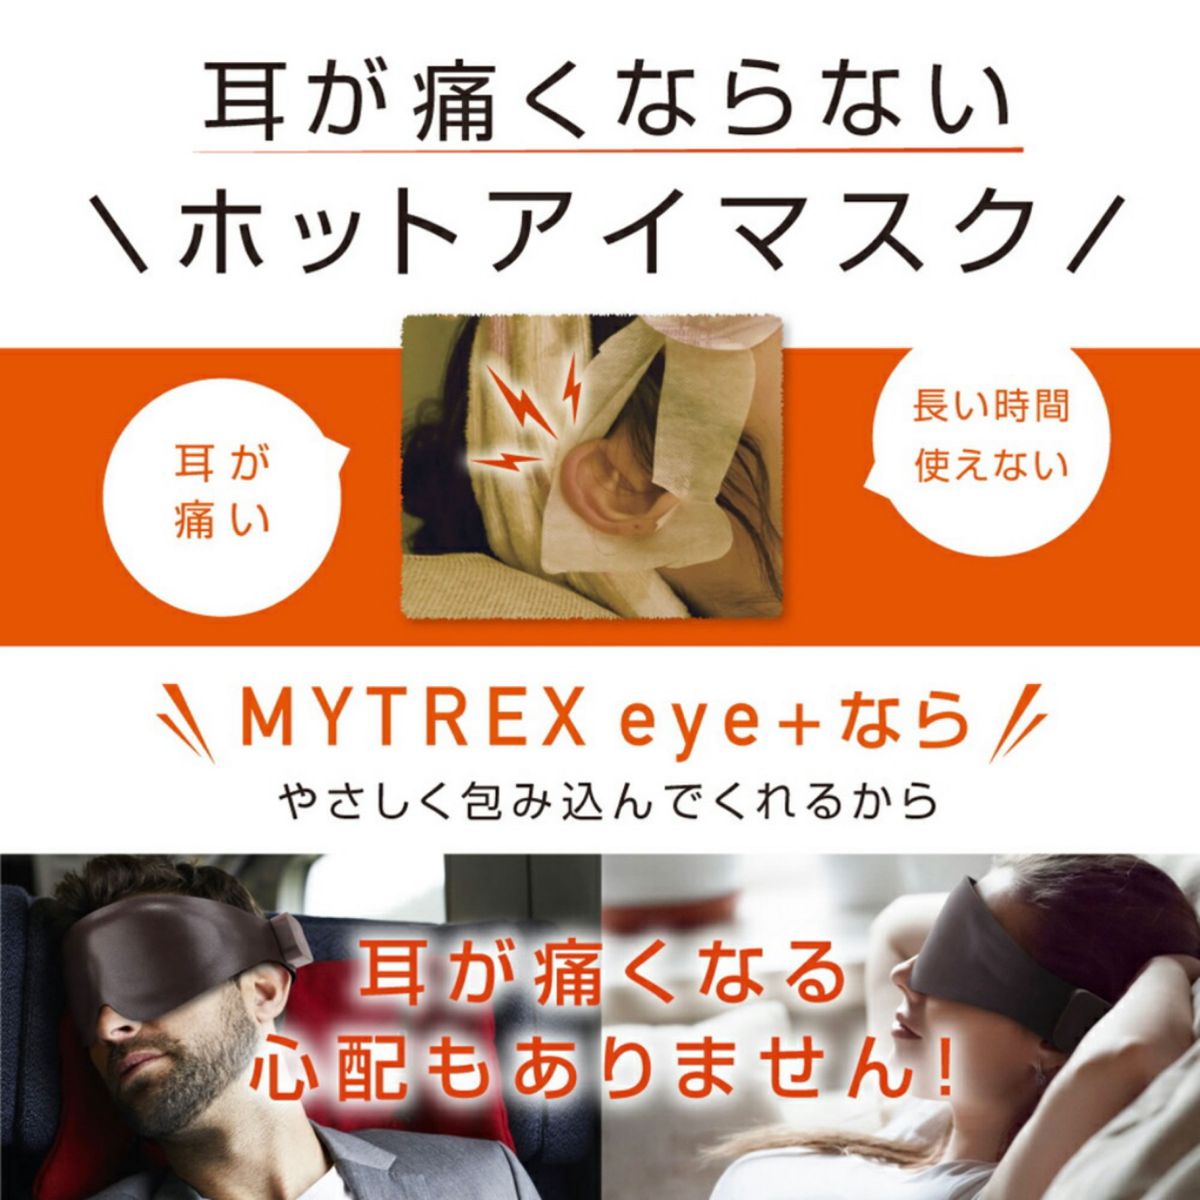 MYTREX eye+(グラフェンコードレスホットアイマスク)MT-E2001